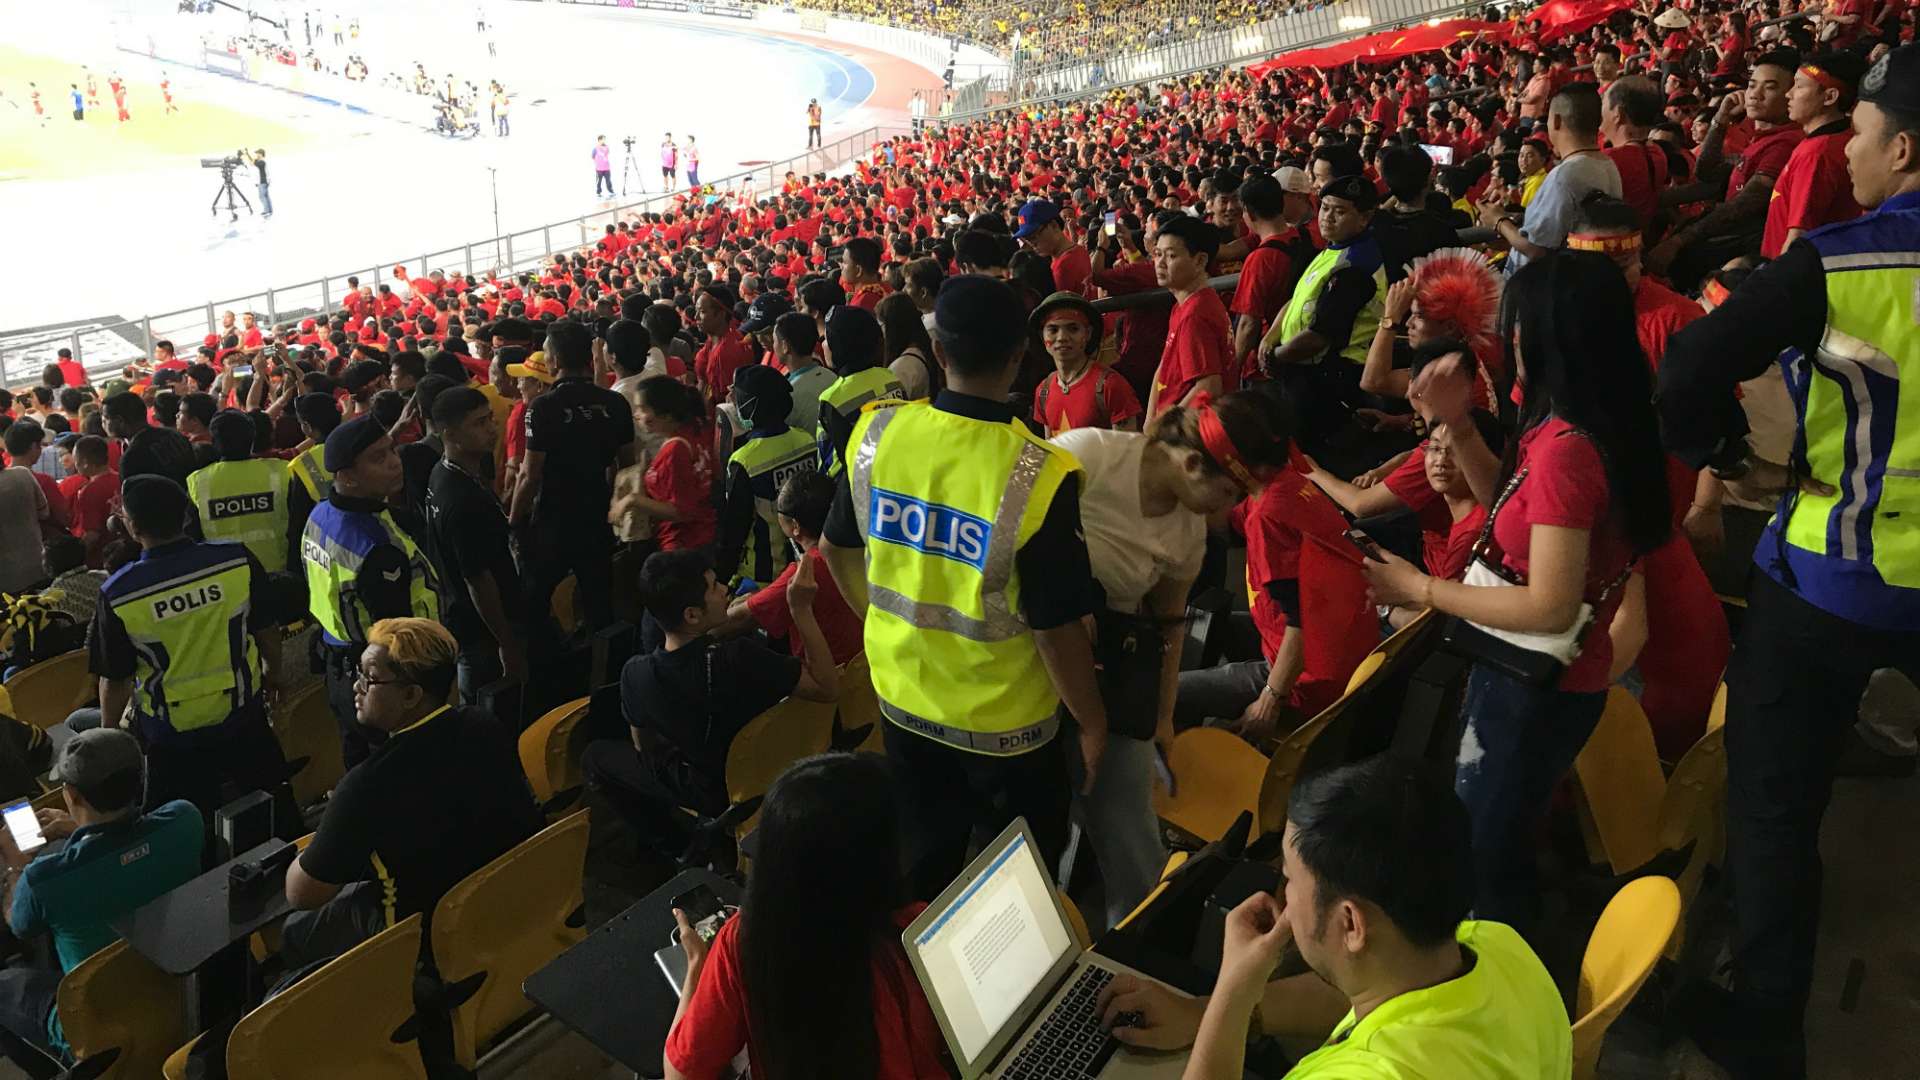 Fan Malaysia v Vietnam, 2018 AFF Suzuki Cup final